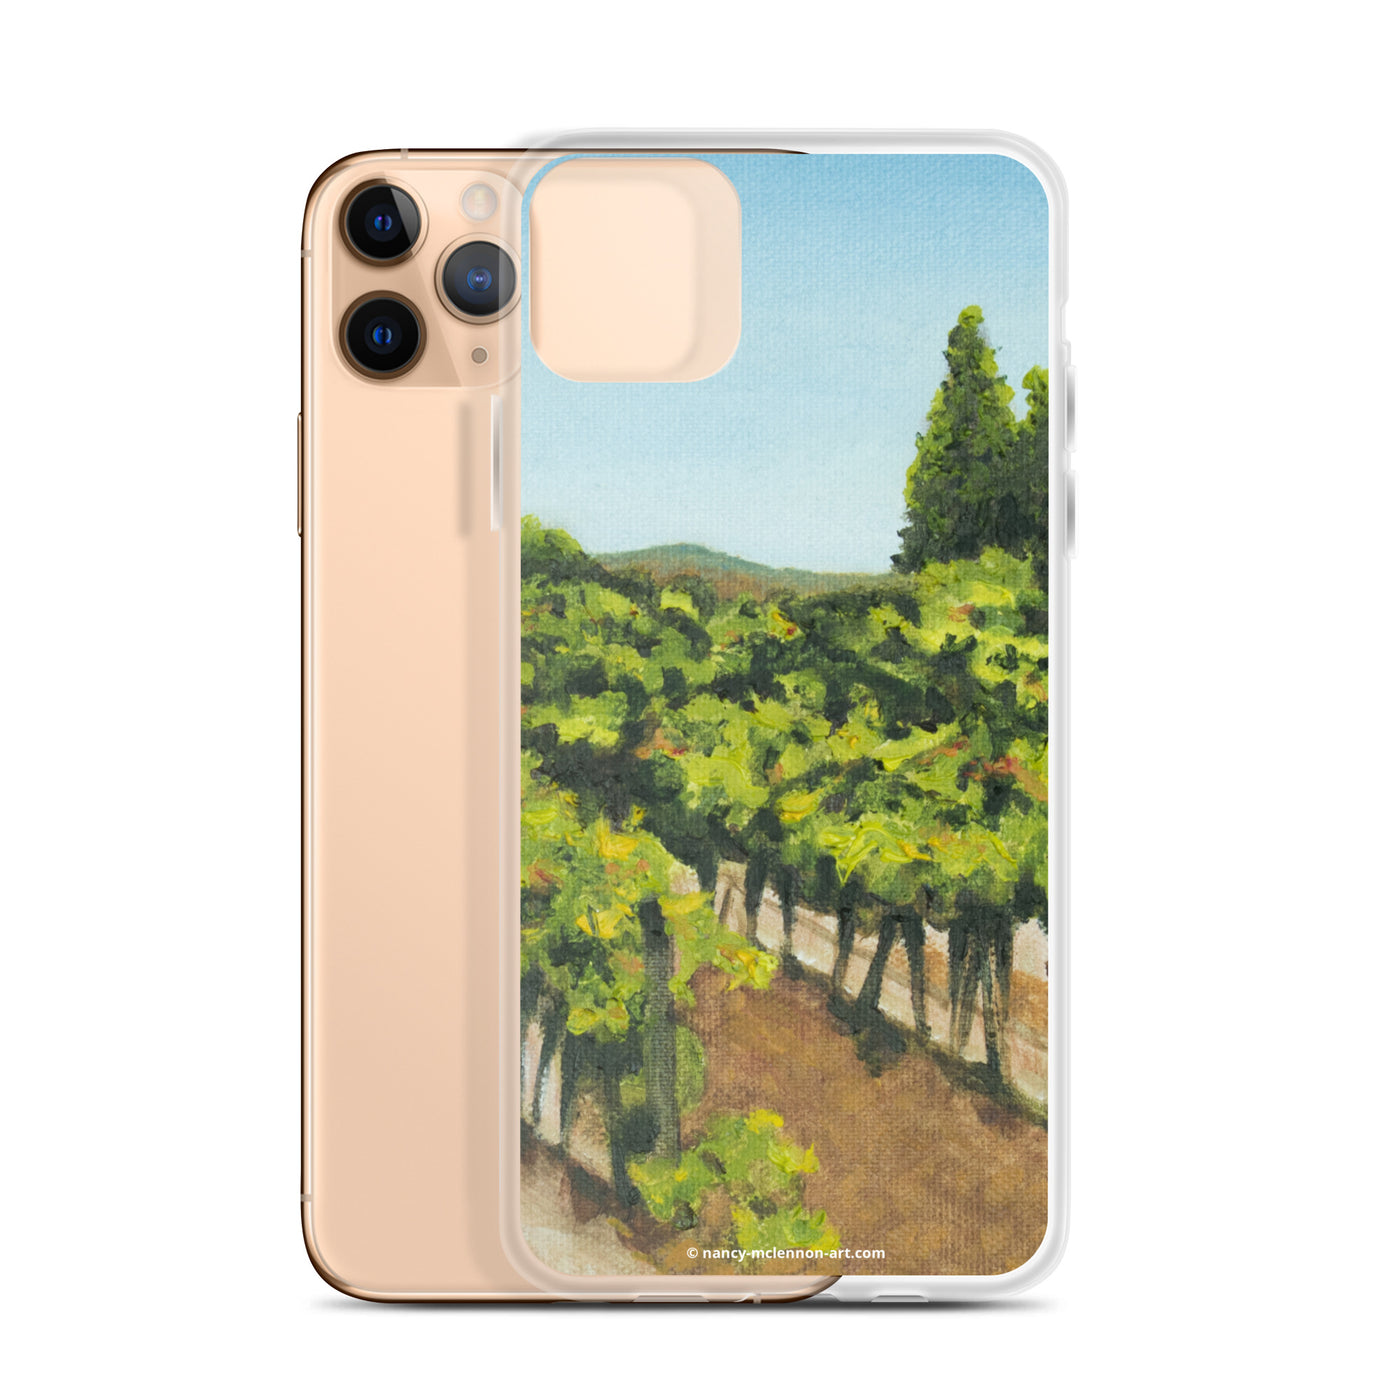 iPhone® Case - Napa Vines before harvest